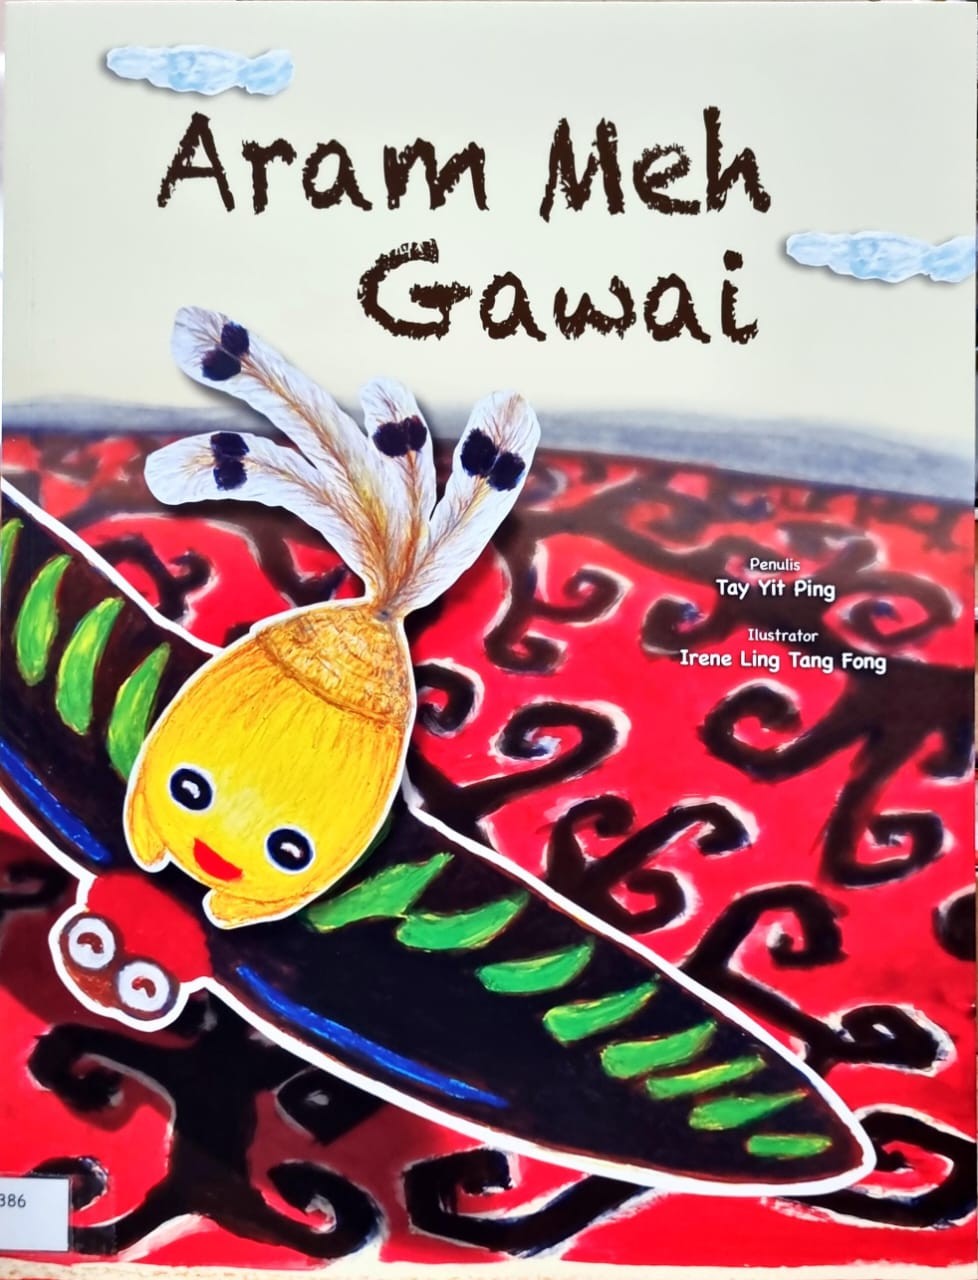 Aram Meh Gawai